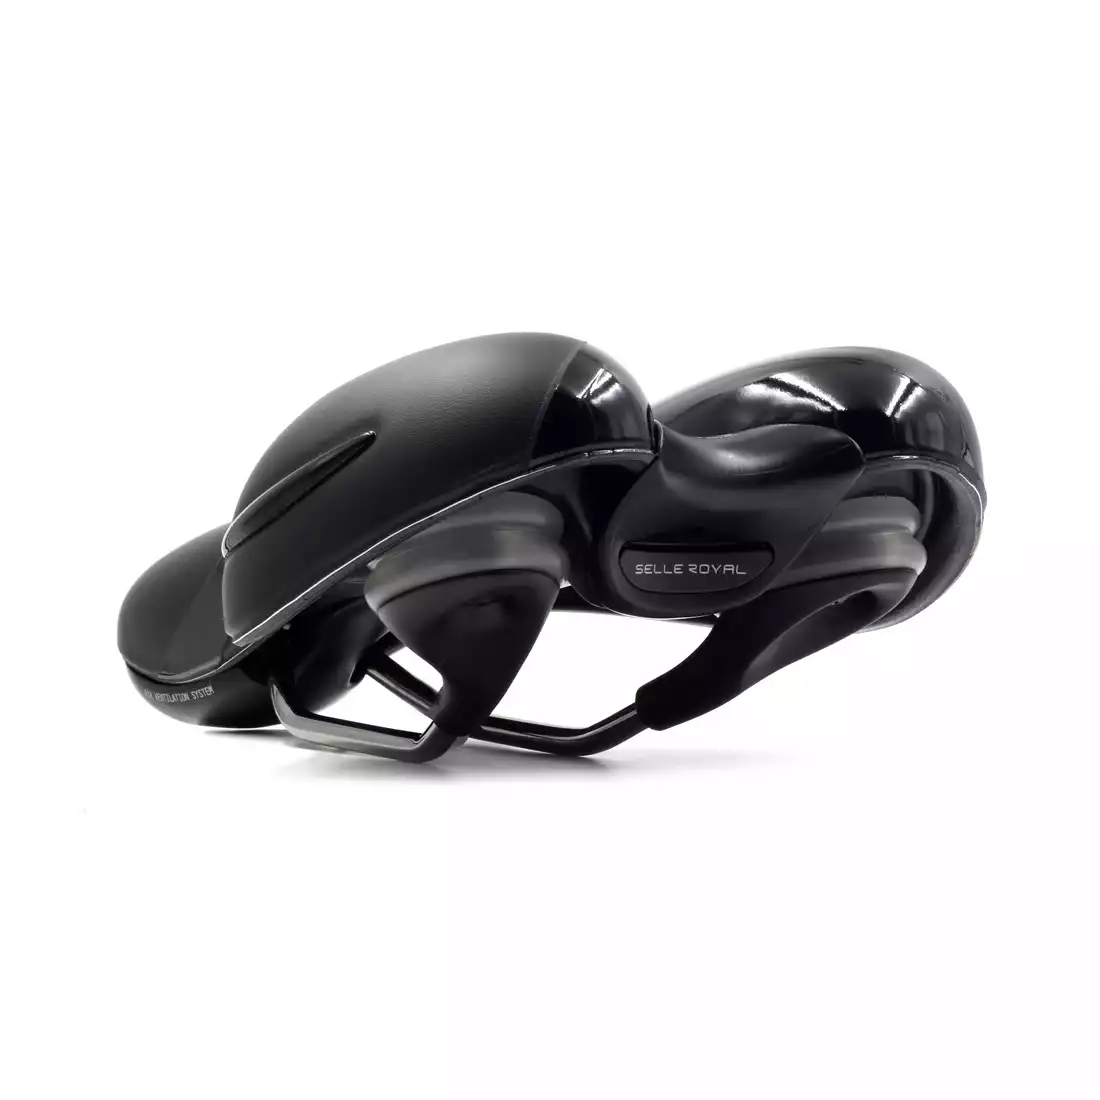 SELLEROYAL RESPIRO SOFT MODERATE bicycle seat 60°, black